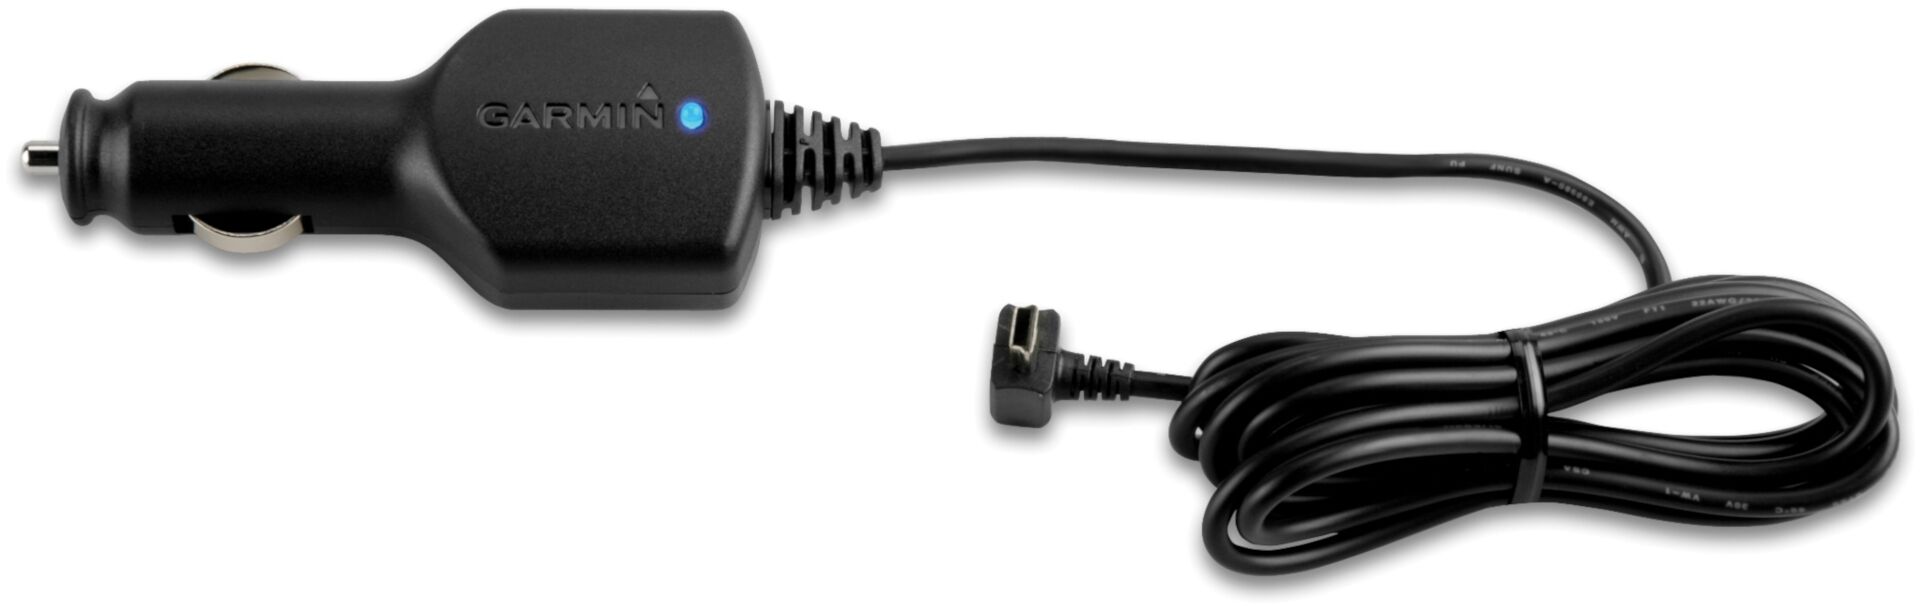 Garmin Zumo/virb Car Power Cable  - Black